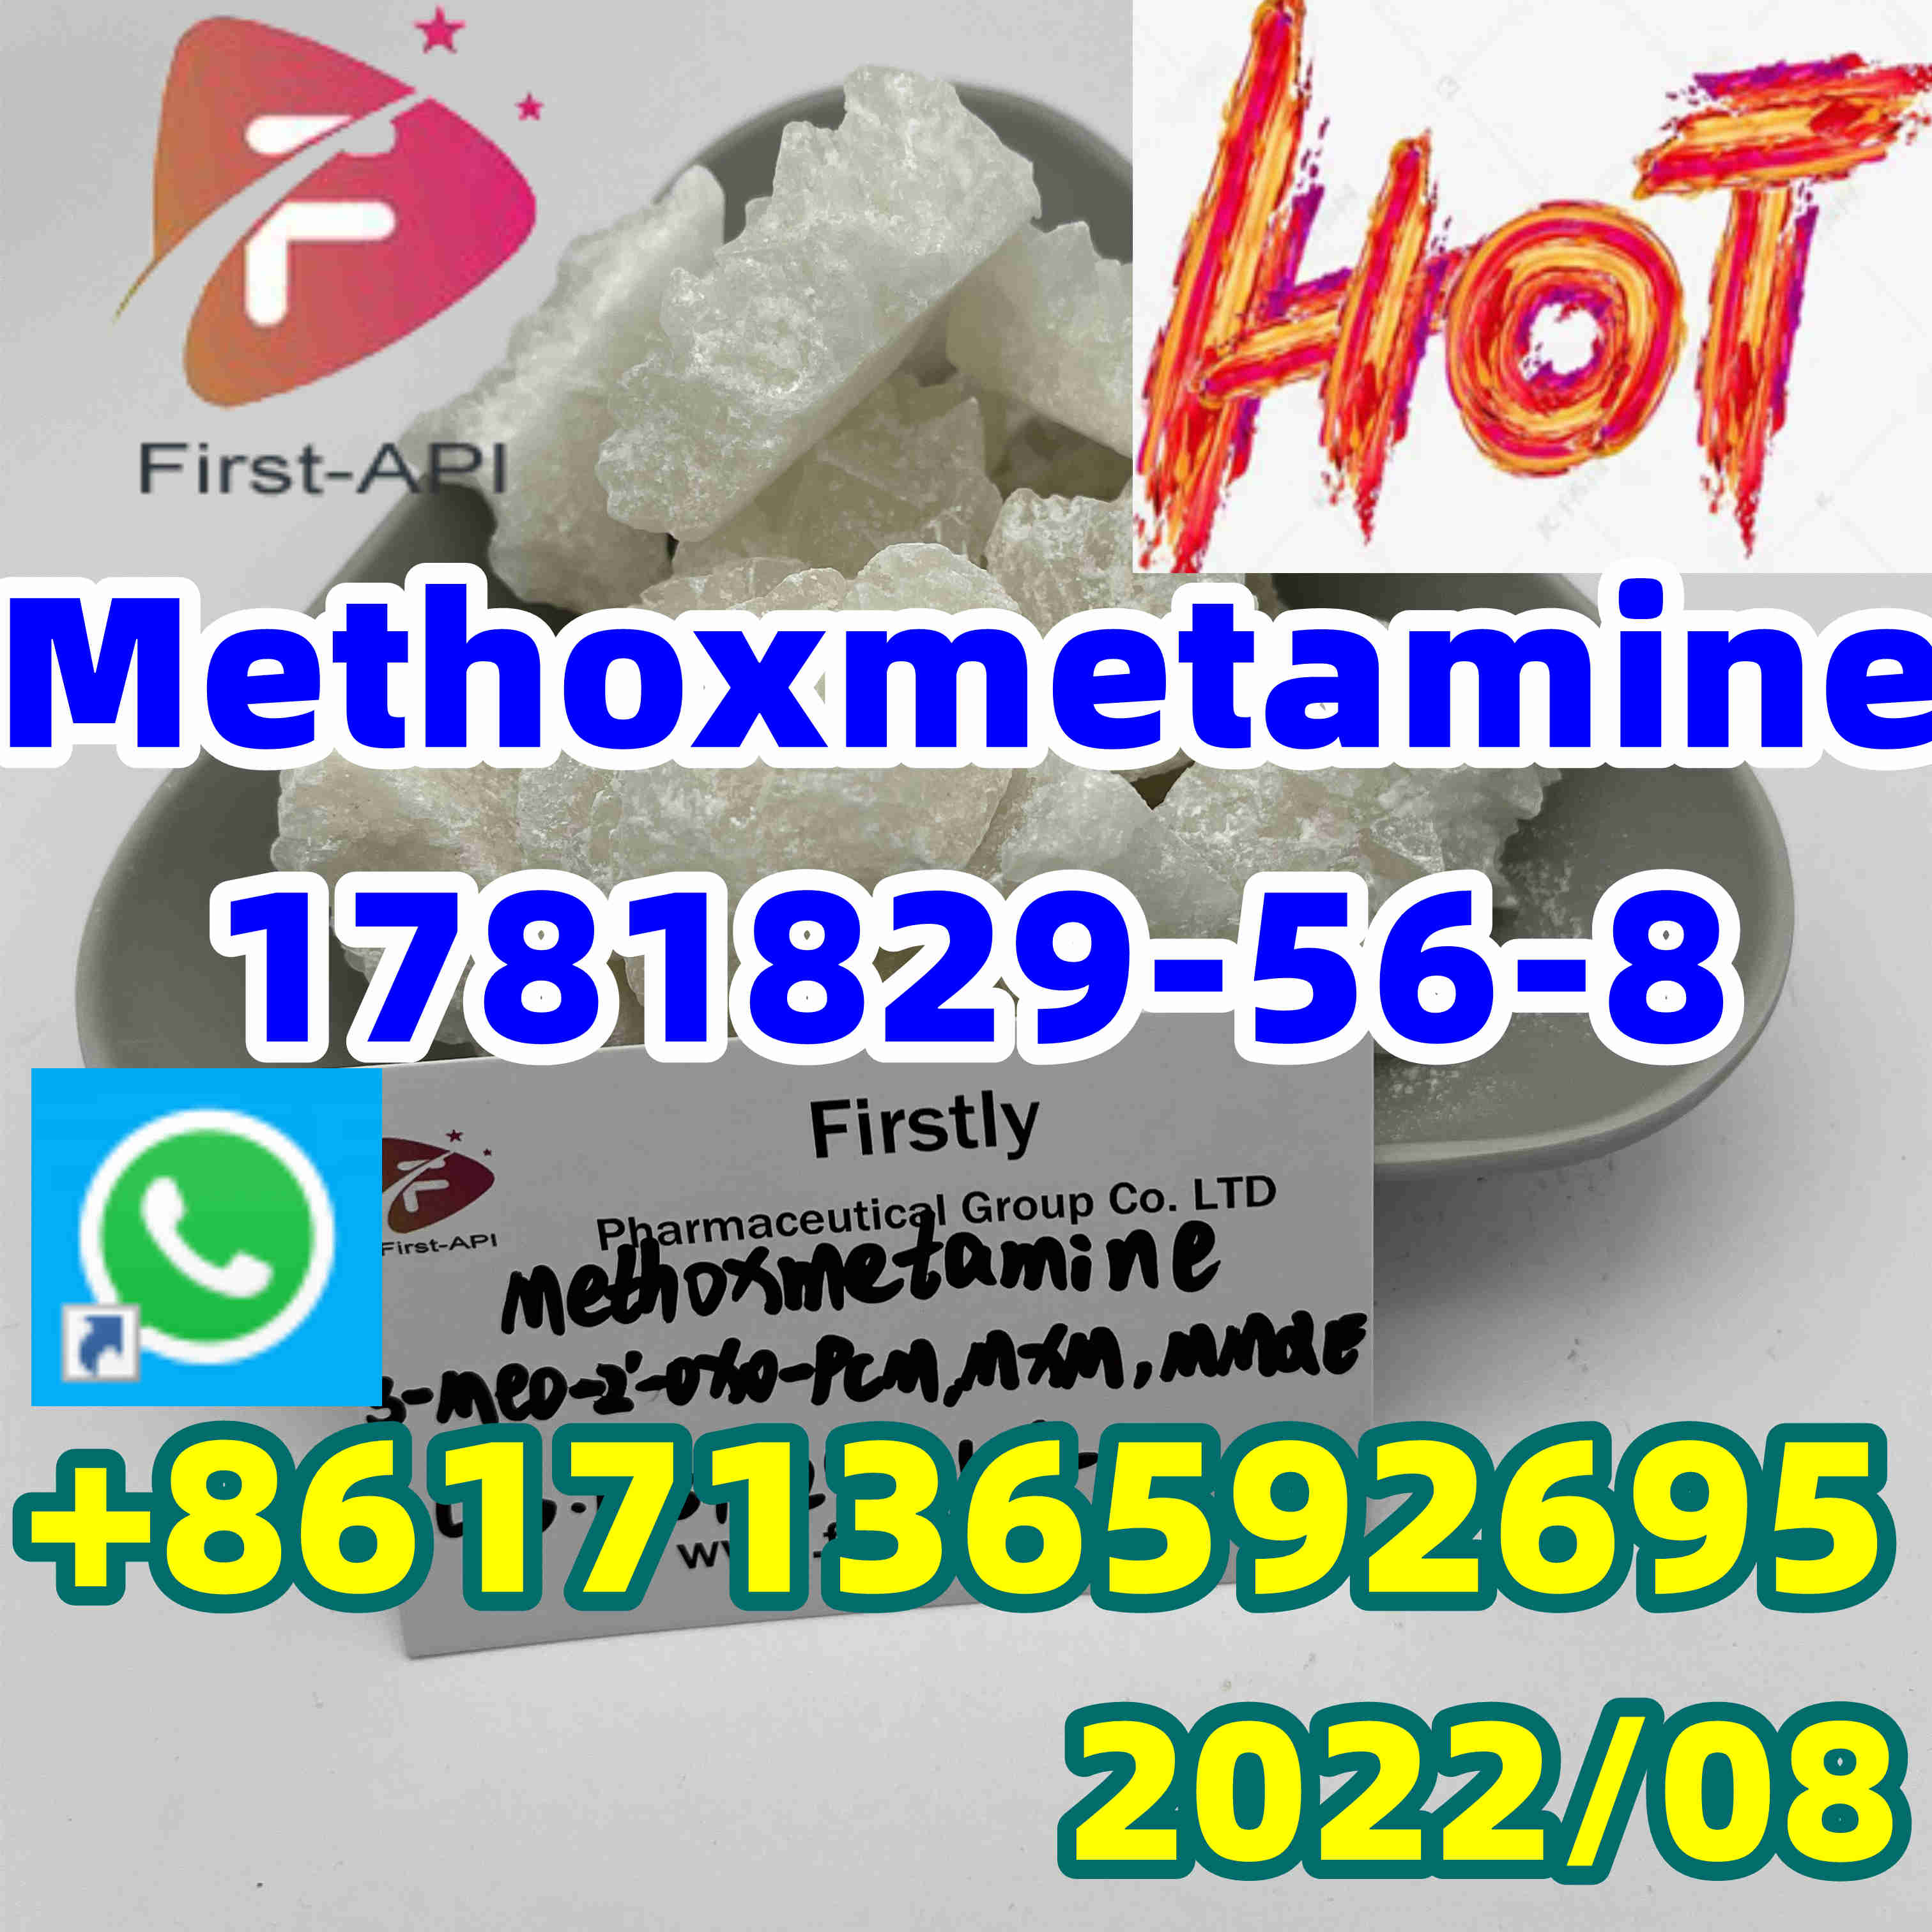 High quality,low price,CAS:1781829-56-8,Methoxmetamine (hydrochloride) - photo